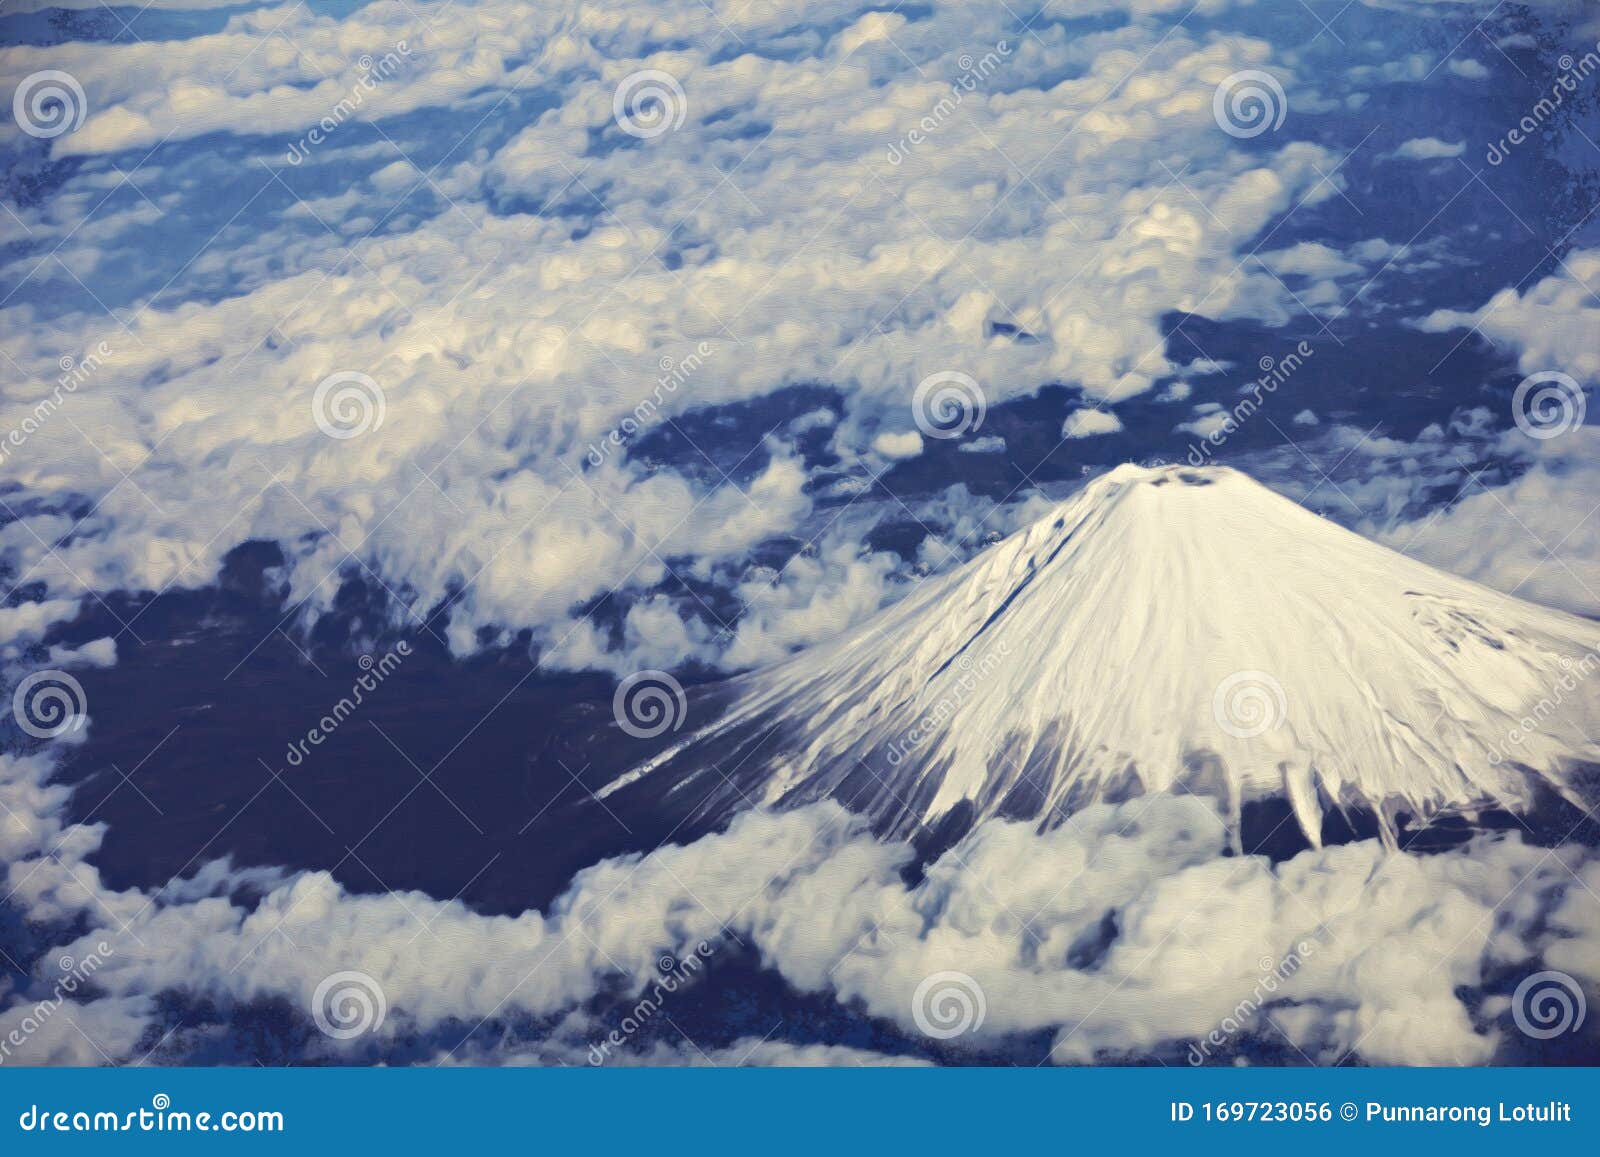 Fuji Mountain Peak in Kawaguchiko, Japan on Watercolor Illustration ...